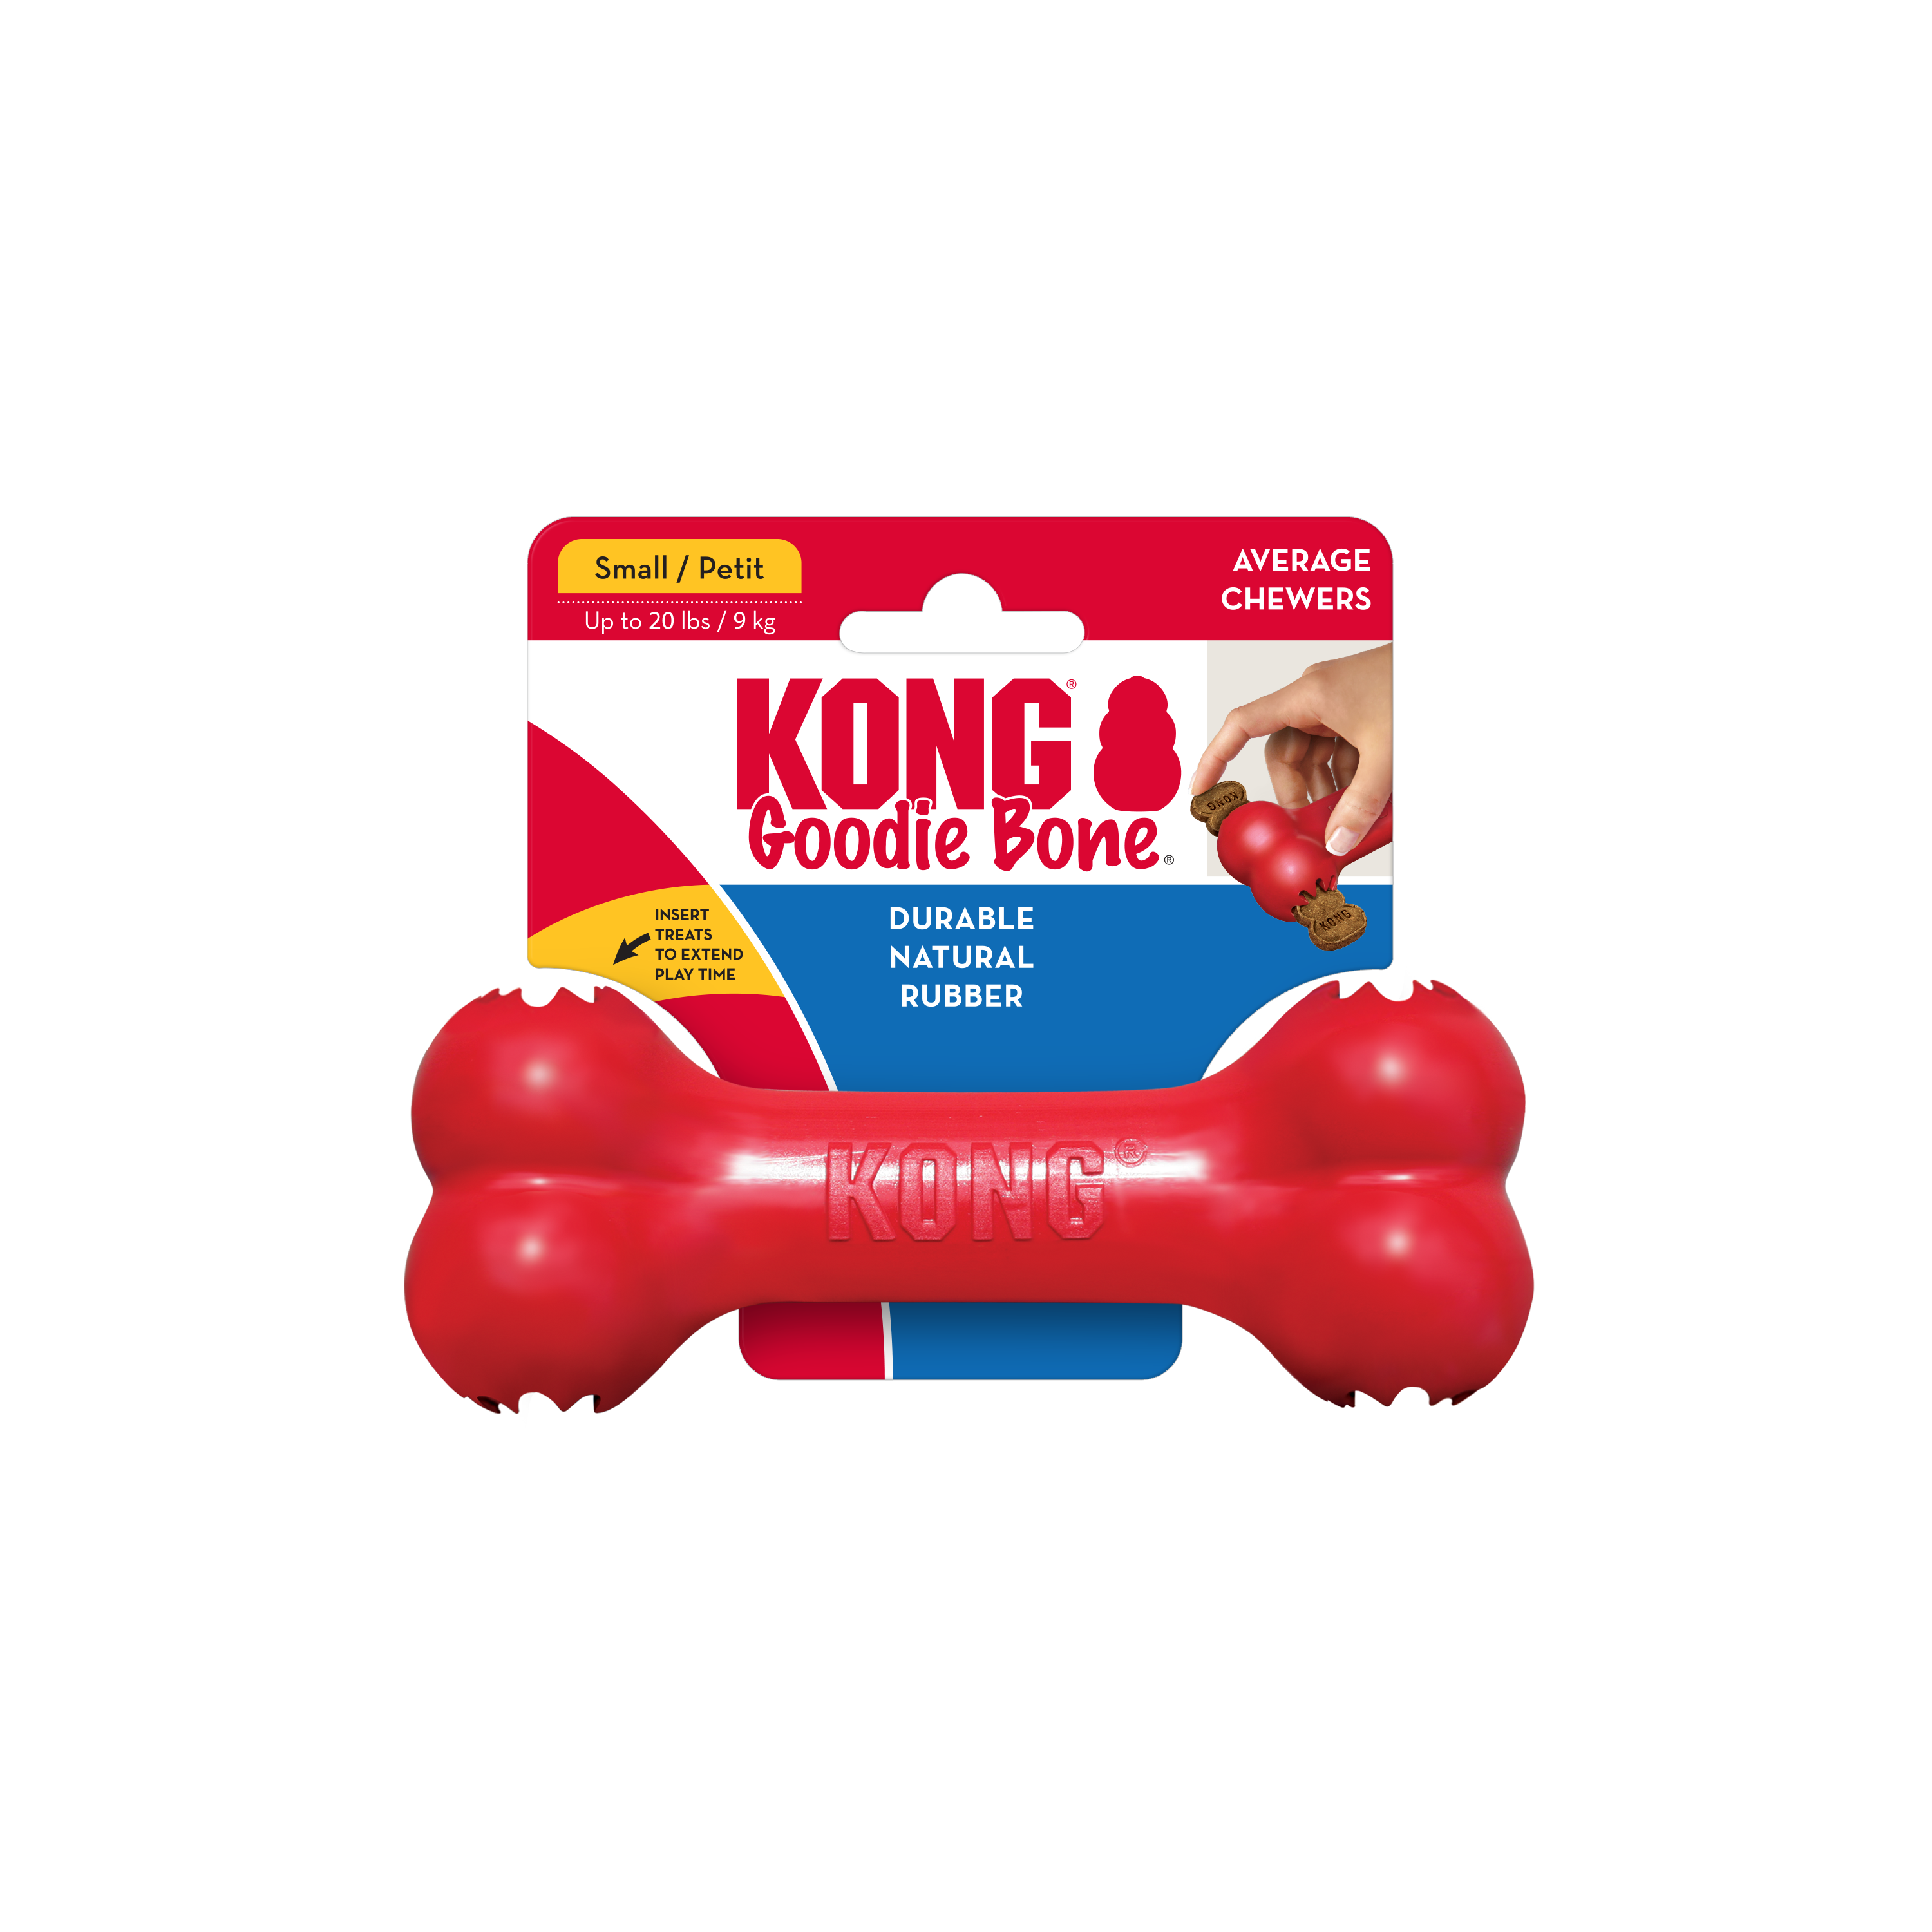 KONG Goodie Bone onpack product image